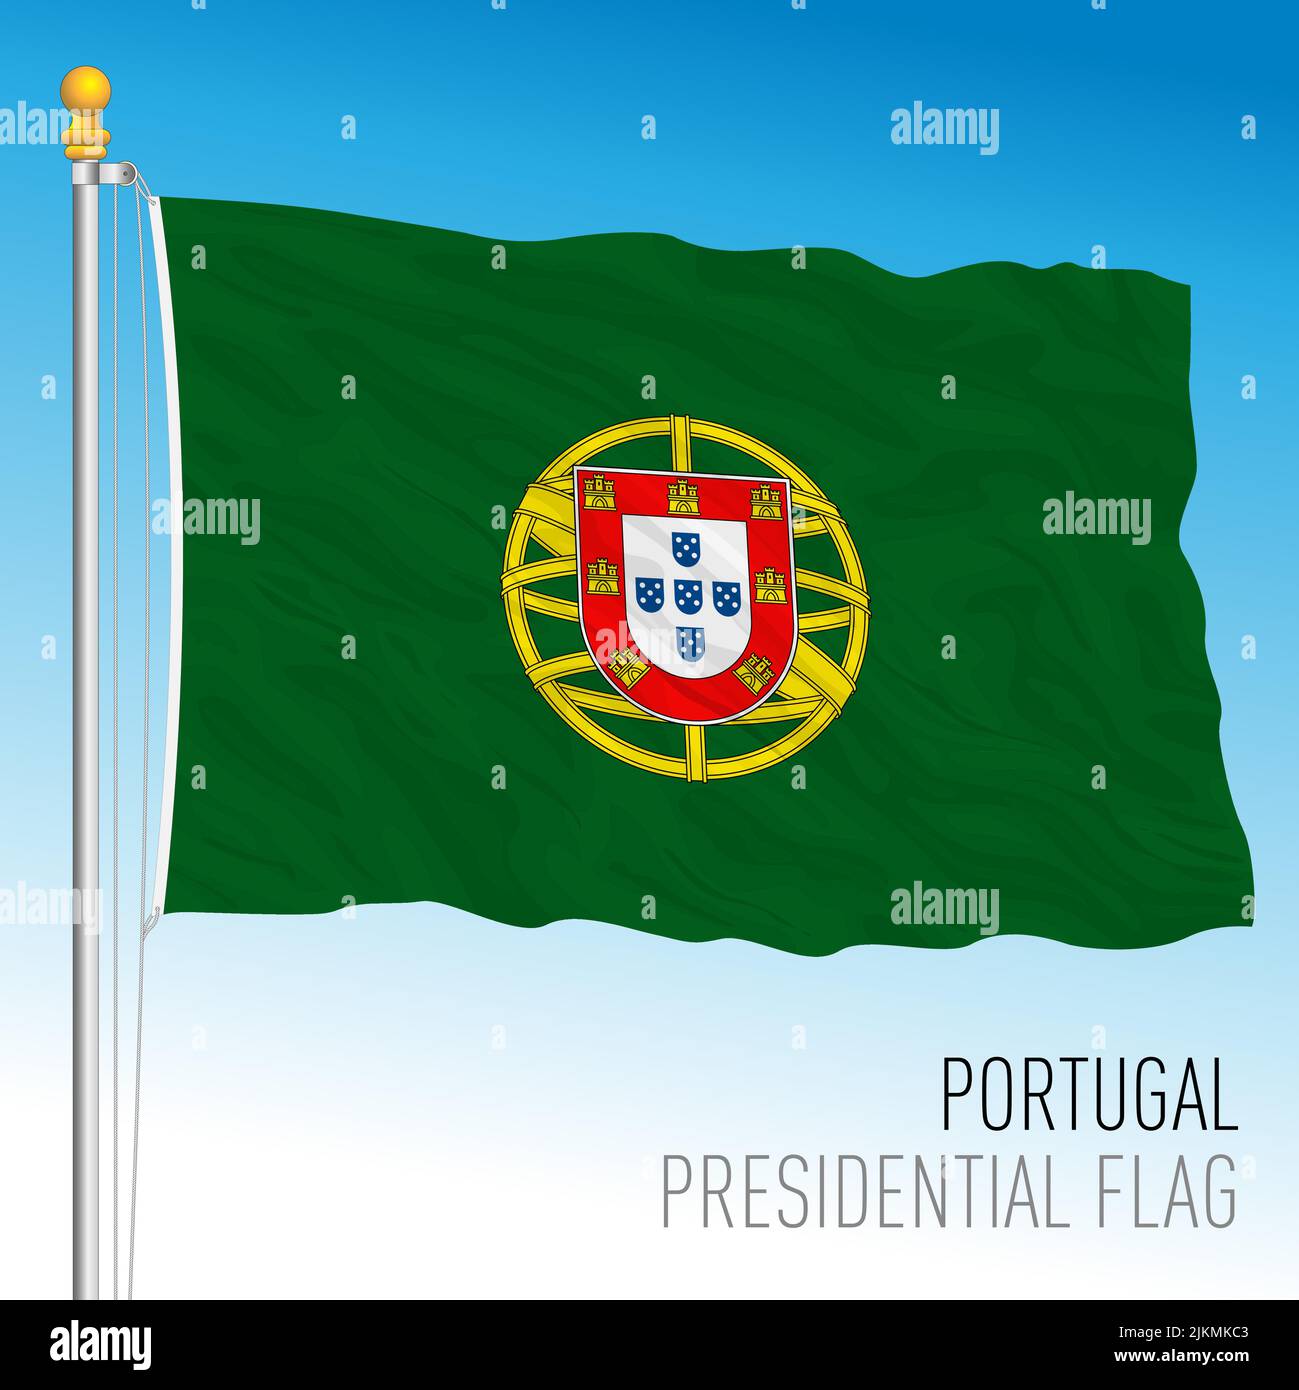 Portugal, Presidential flag, European Union, vector illustration Stock Vector